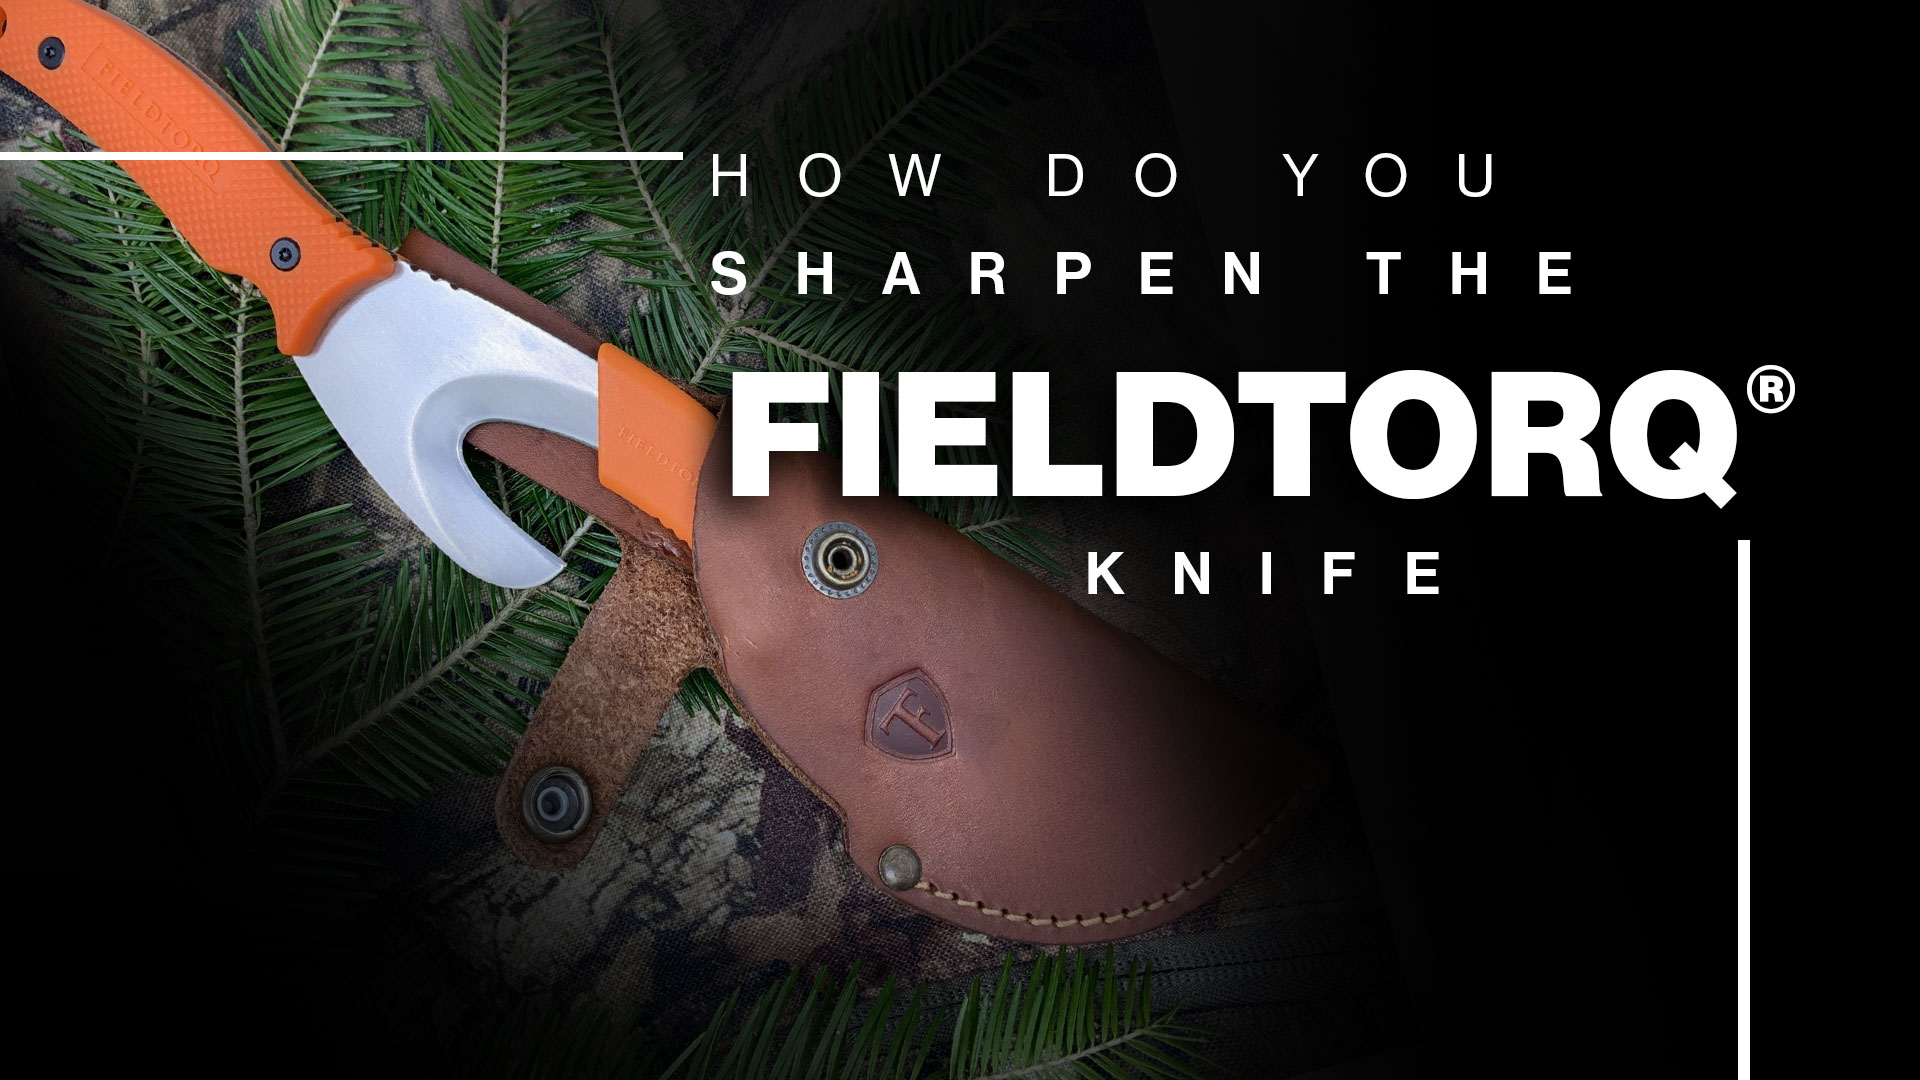 How do you sharpen the FieldTorq knife?